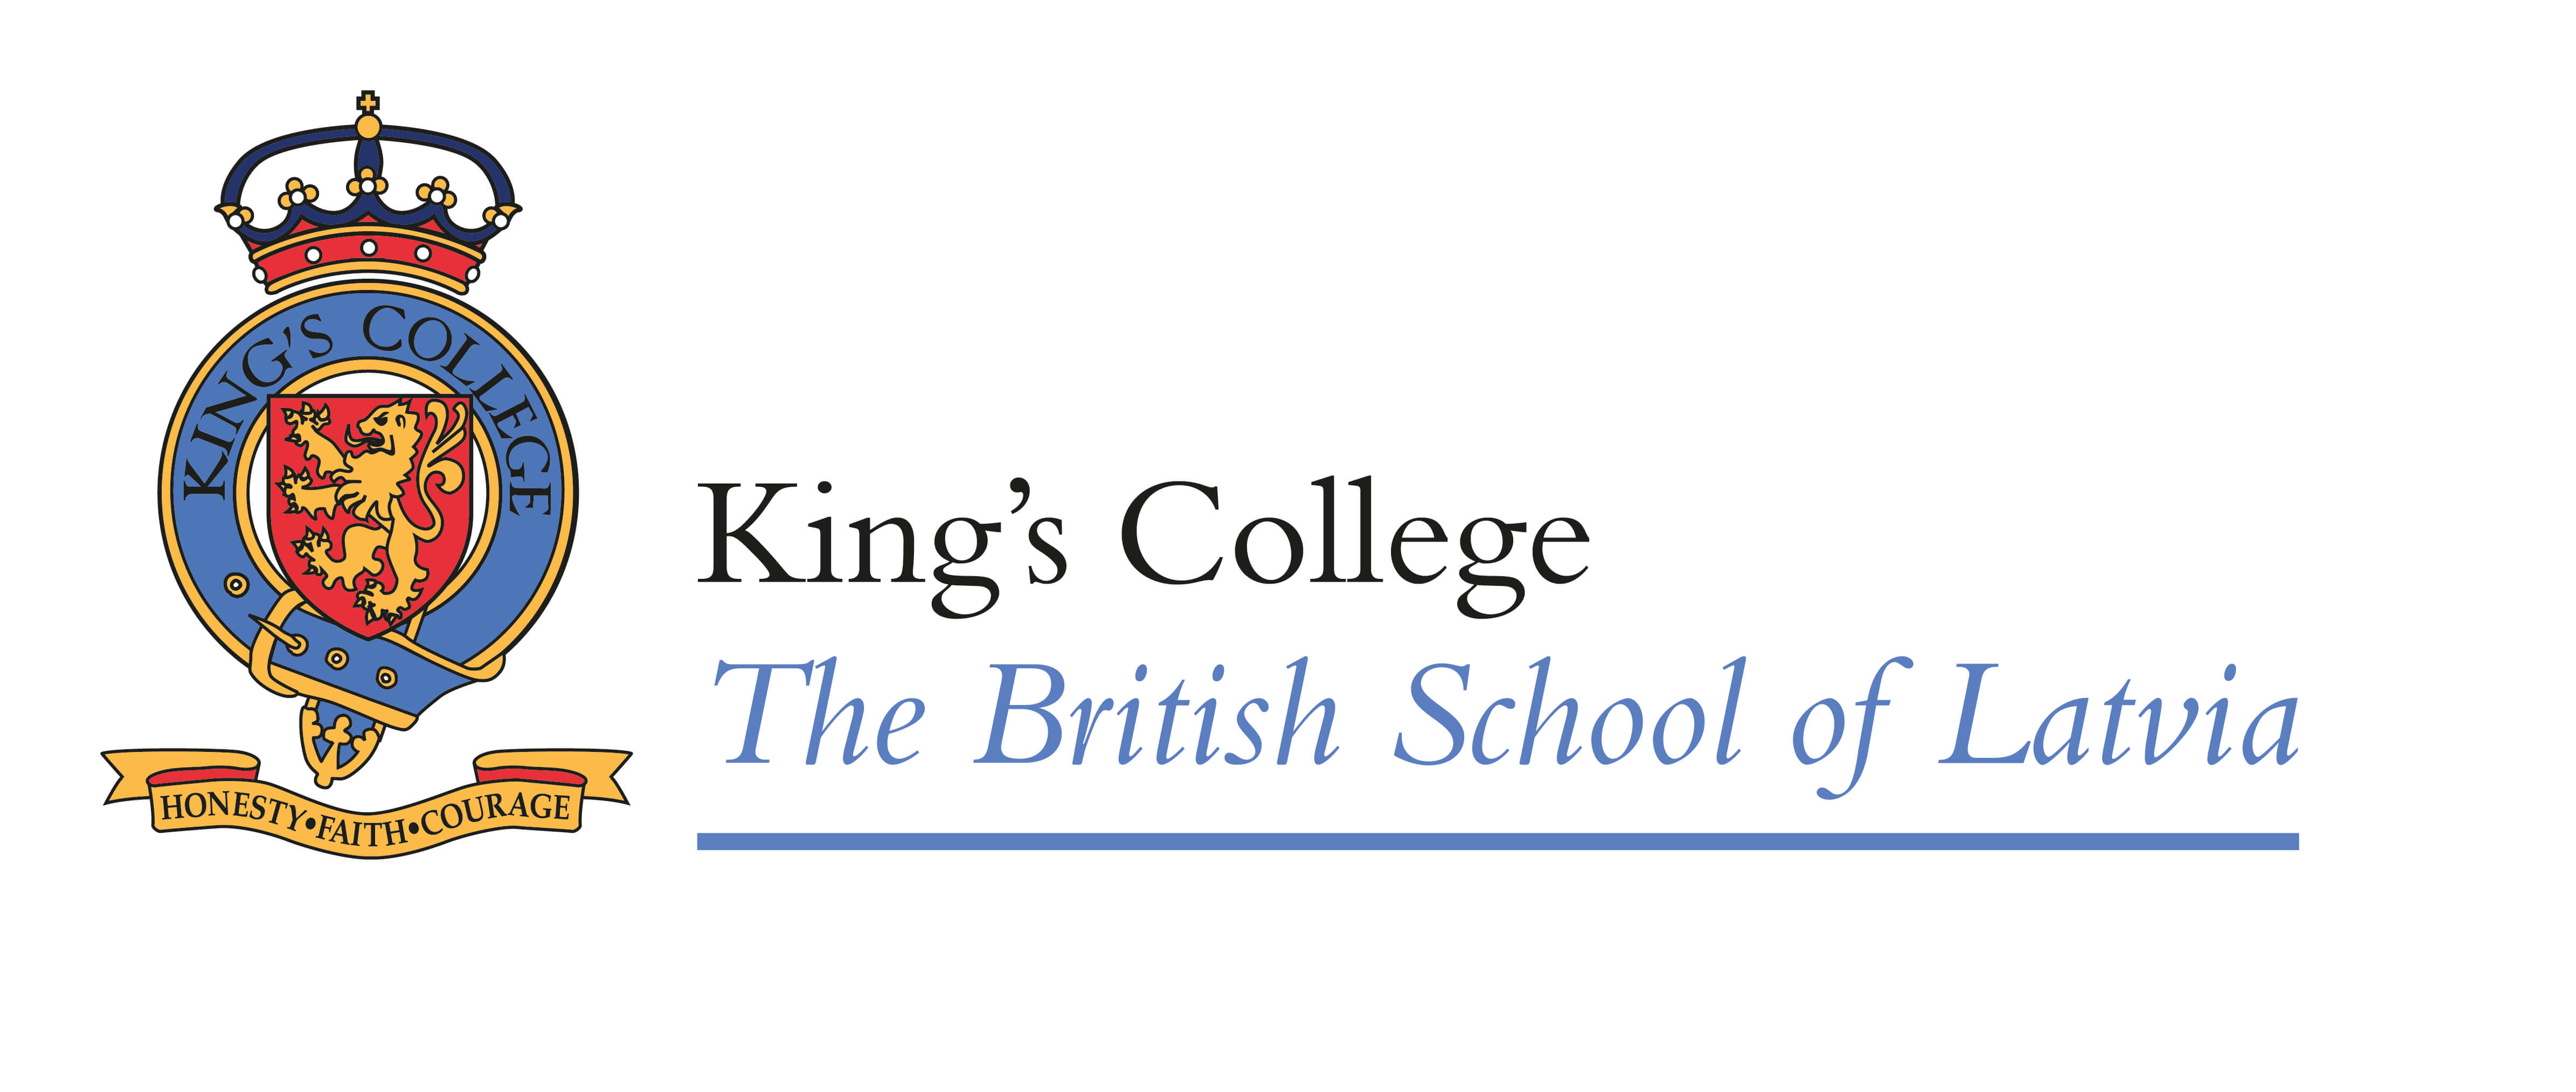 King’s College, The British School of Latvia